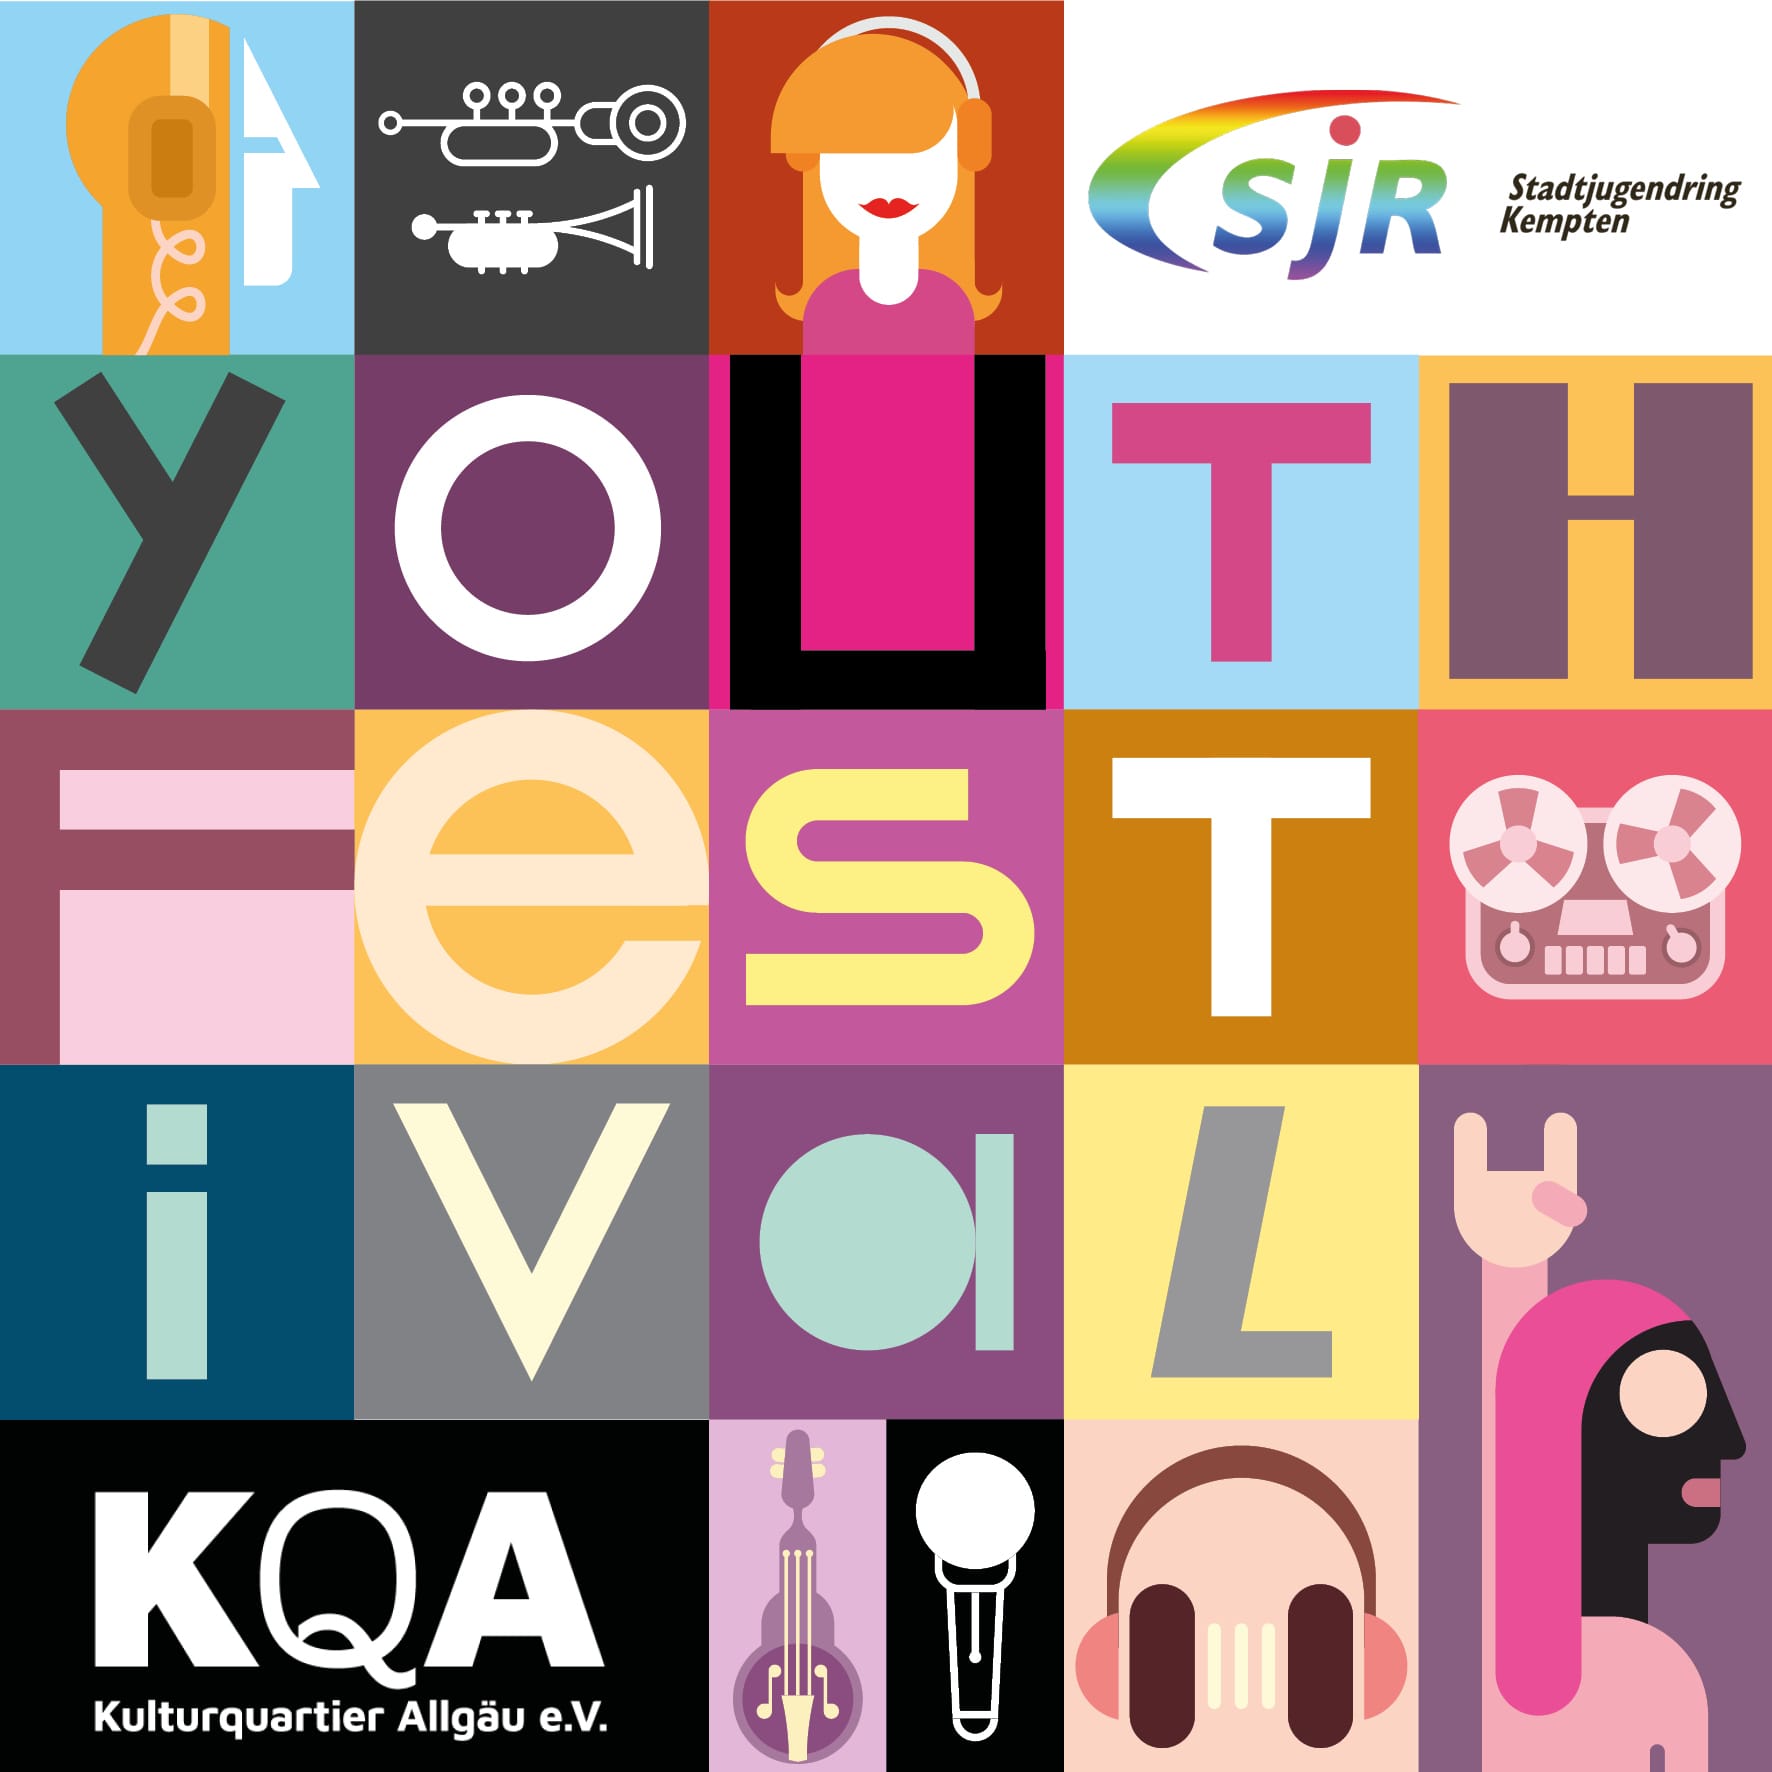 Youthfestival Stadtjugendring Kempten und Kulturquartier Allgäu präsentieren